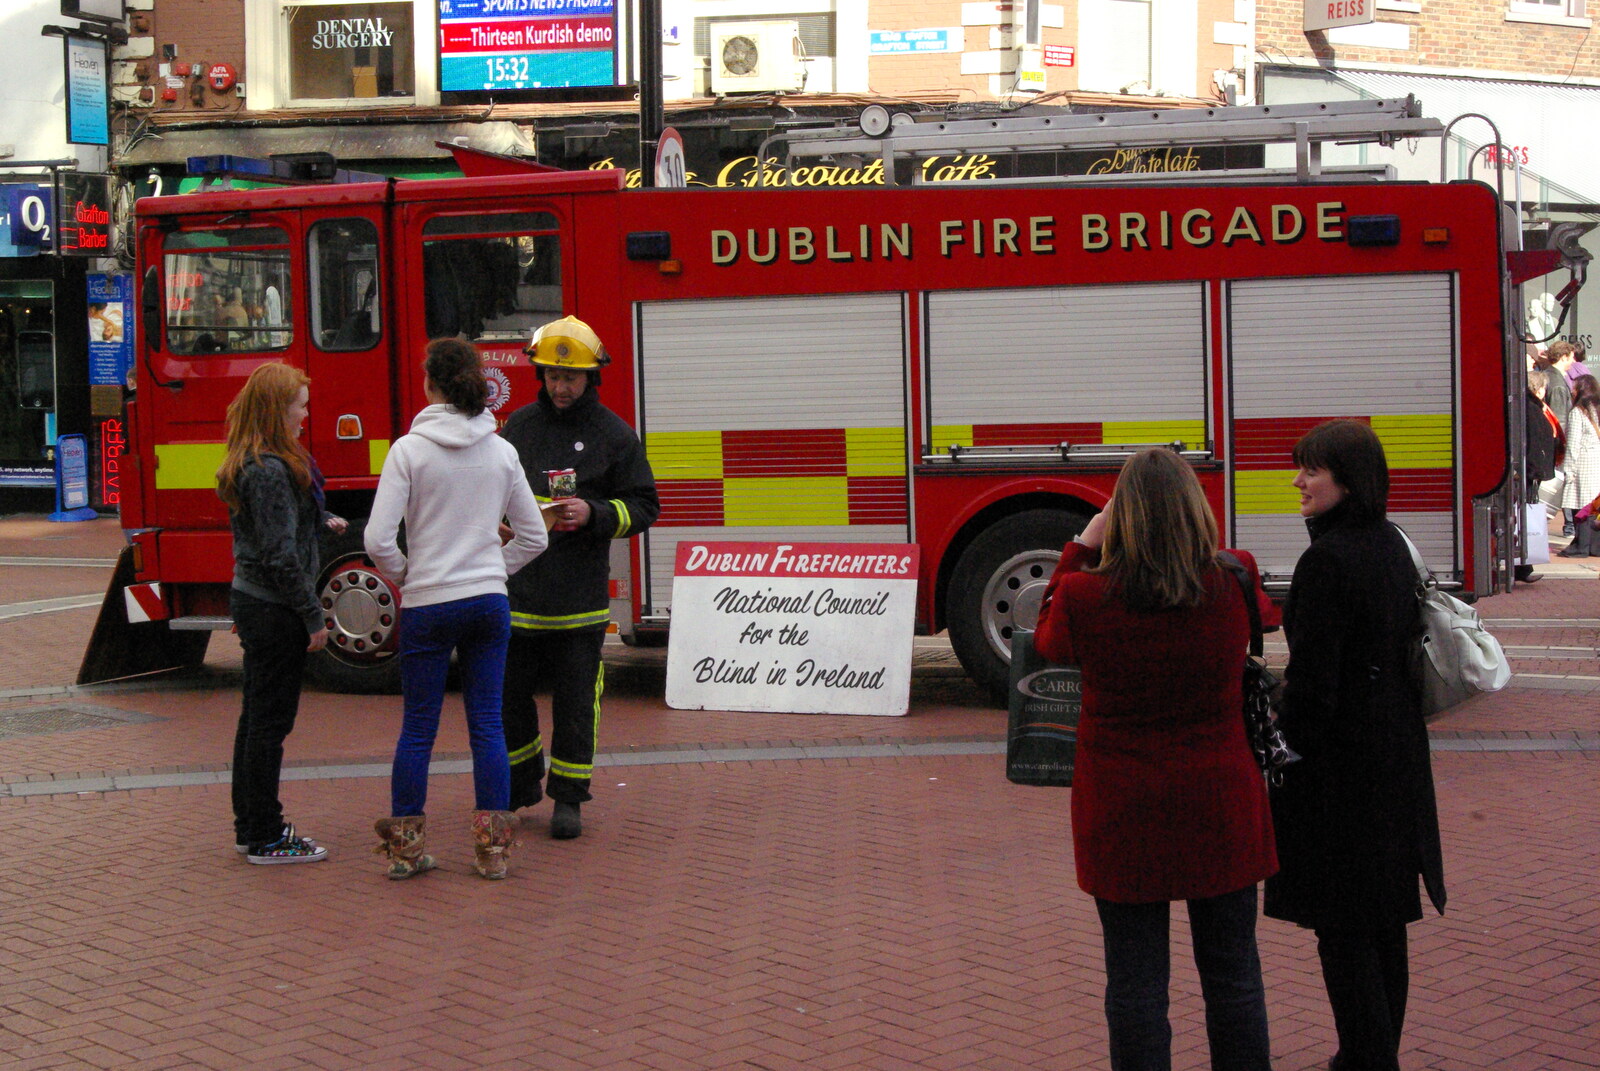 Easter in Dublin, Ireland - 21st March 2008: The Dublin Fire Brigade engine